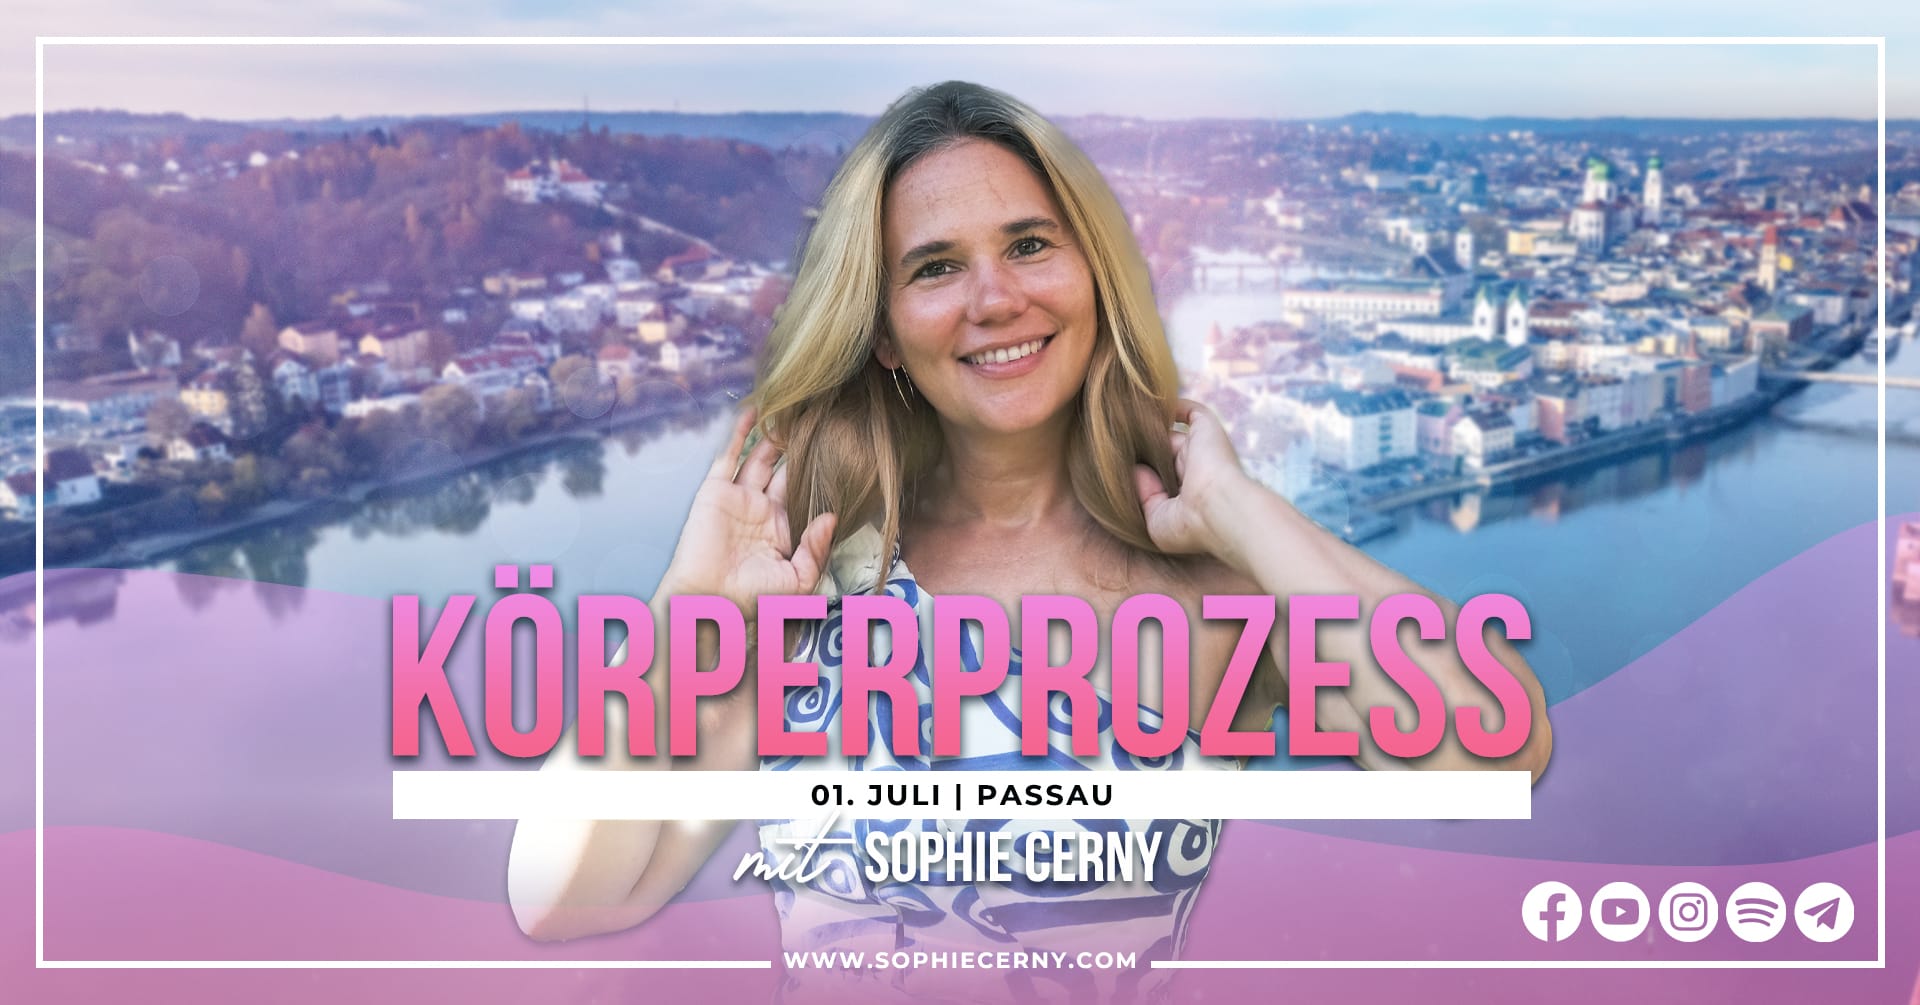 Access Körperprozess Passau Sophie Cerny